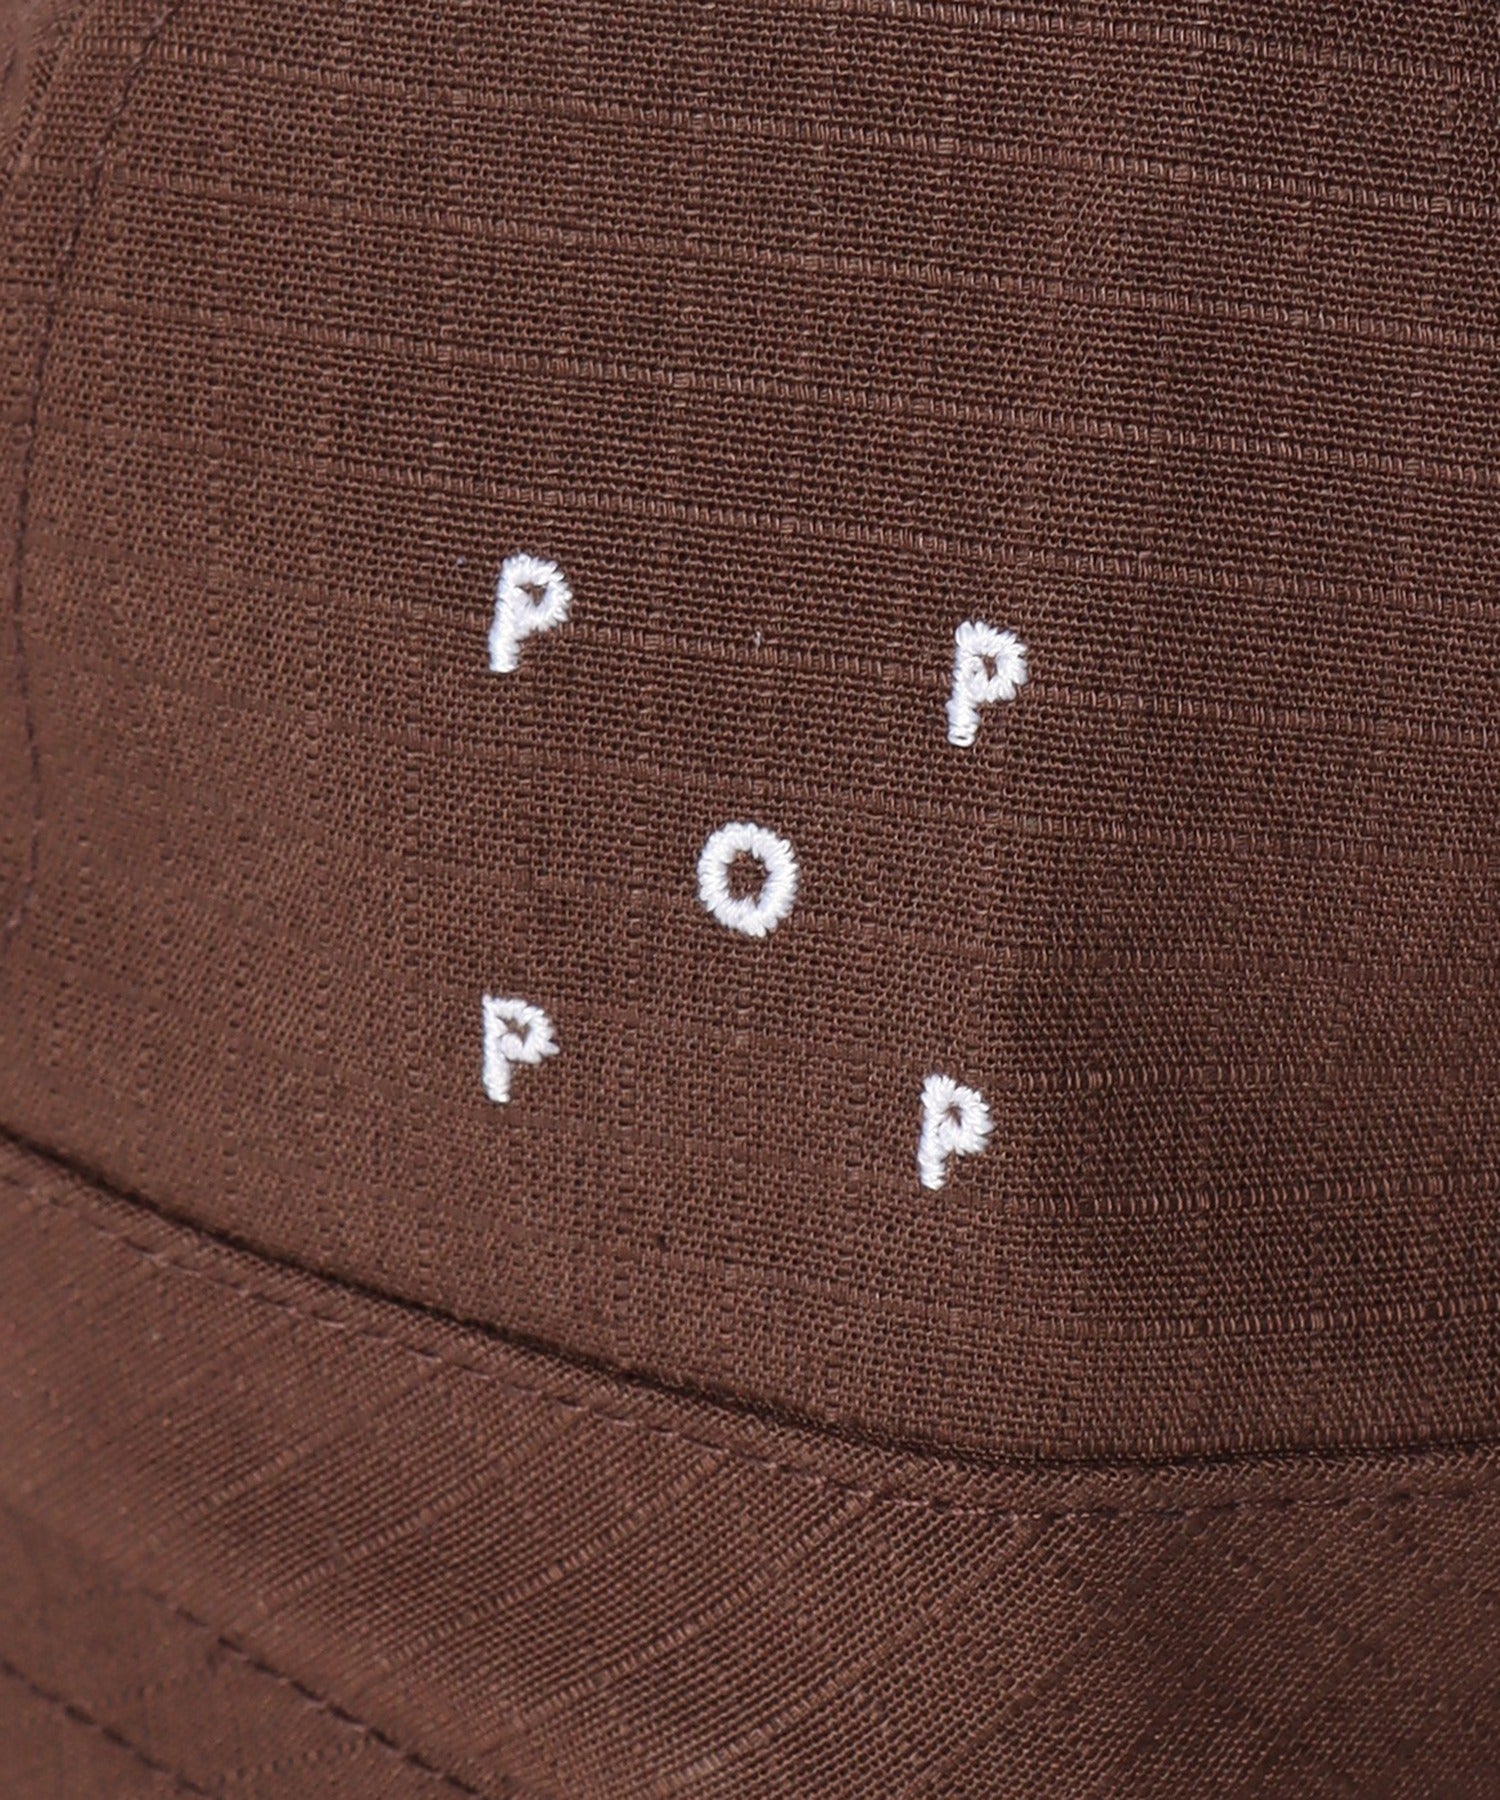 POP TRADING COMPANY/ポップトレーディングカンパニー bell hat